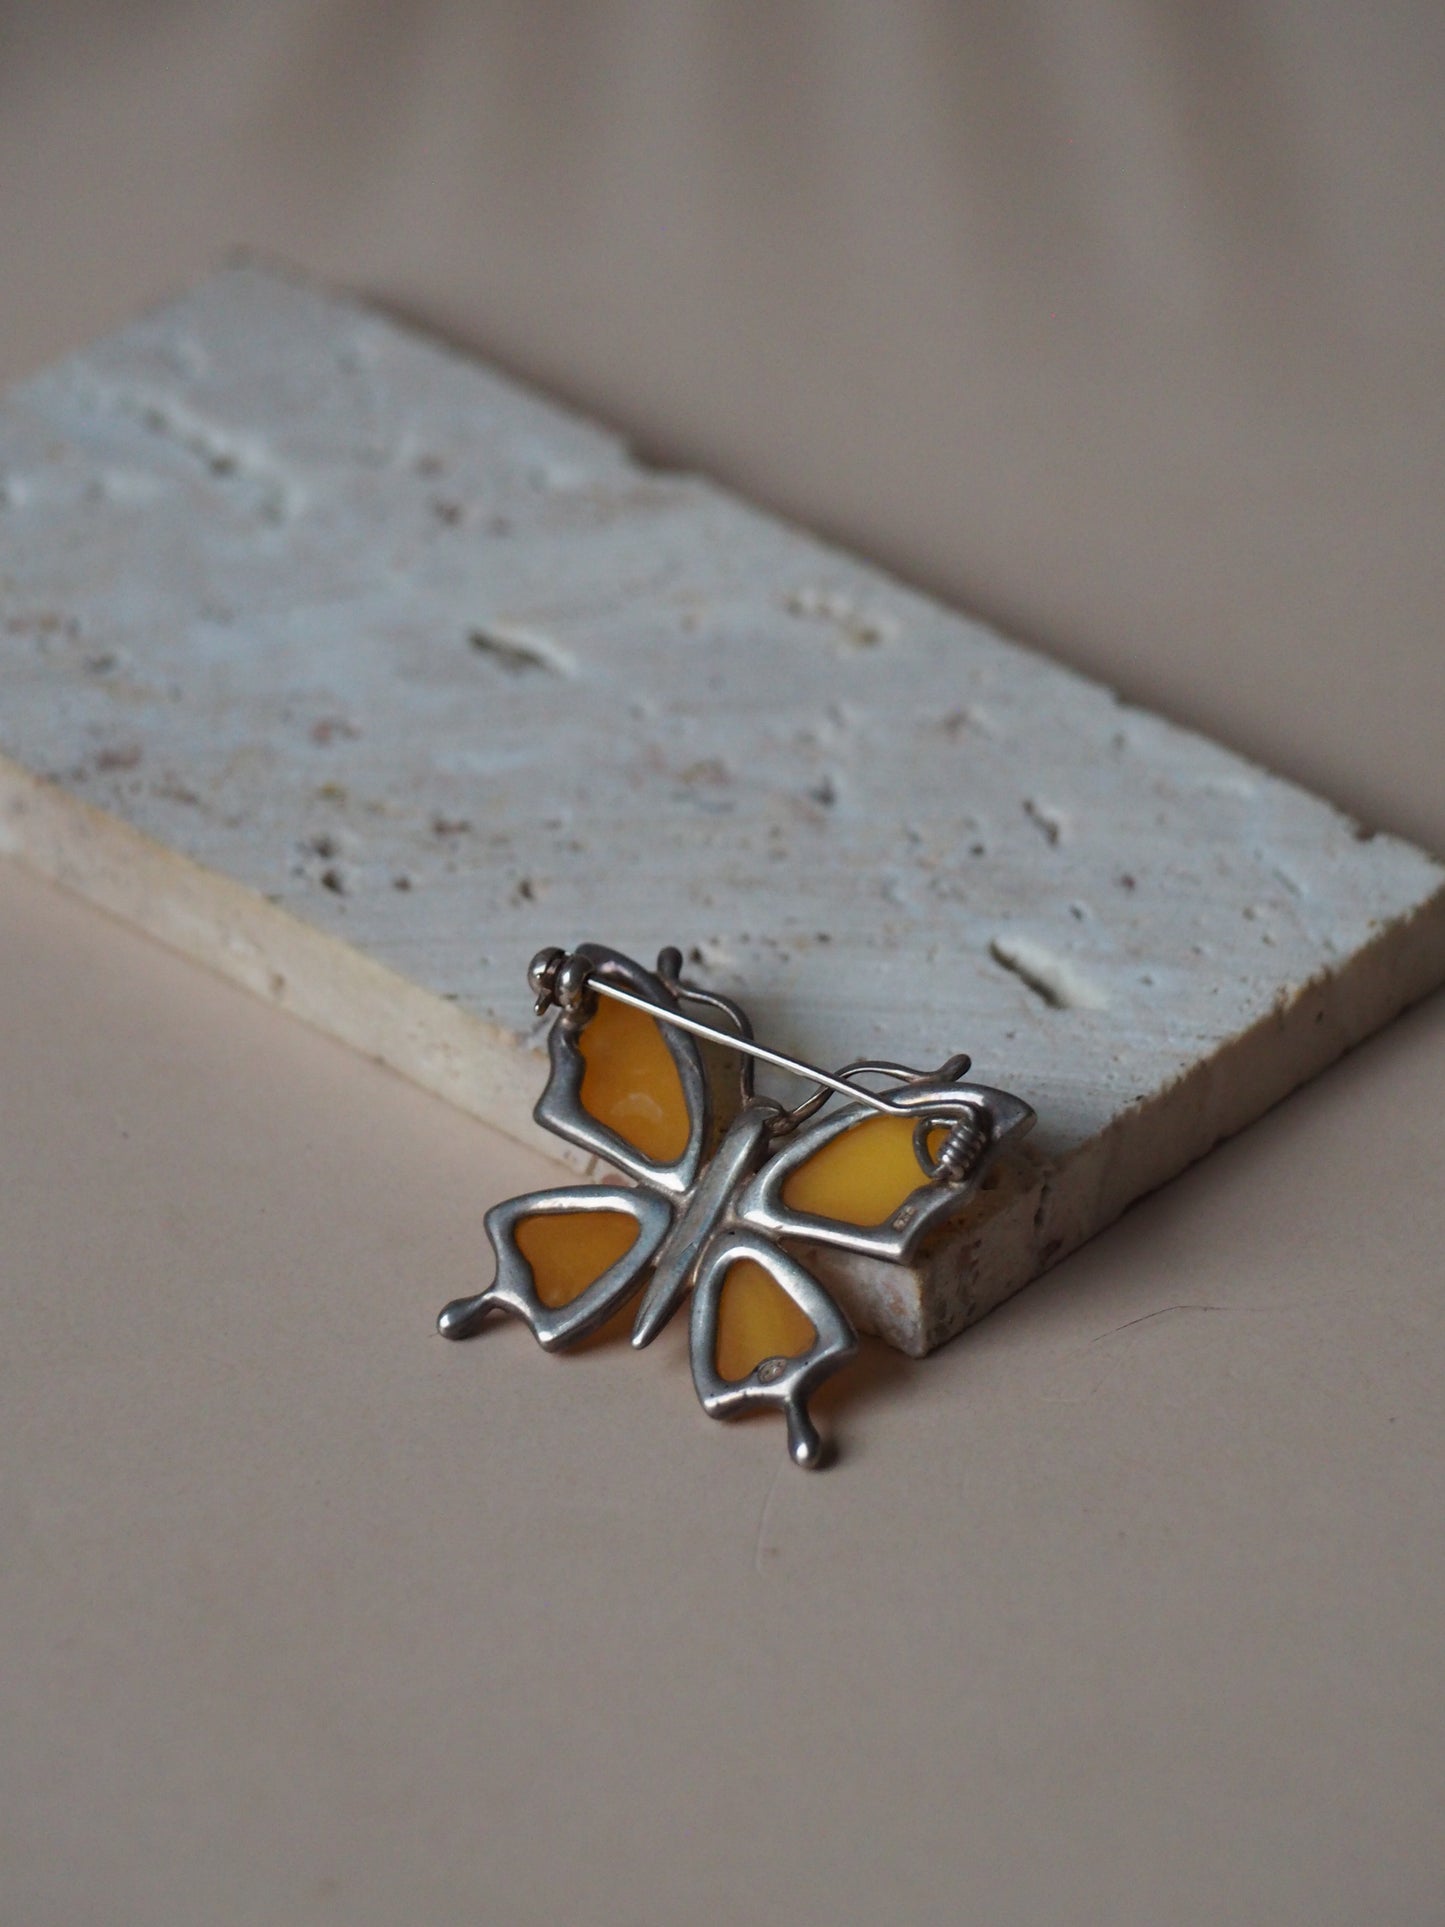 Butterfly Butterscotch Amber Brooch in Silver 925